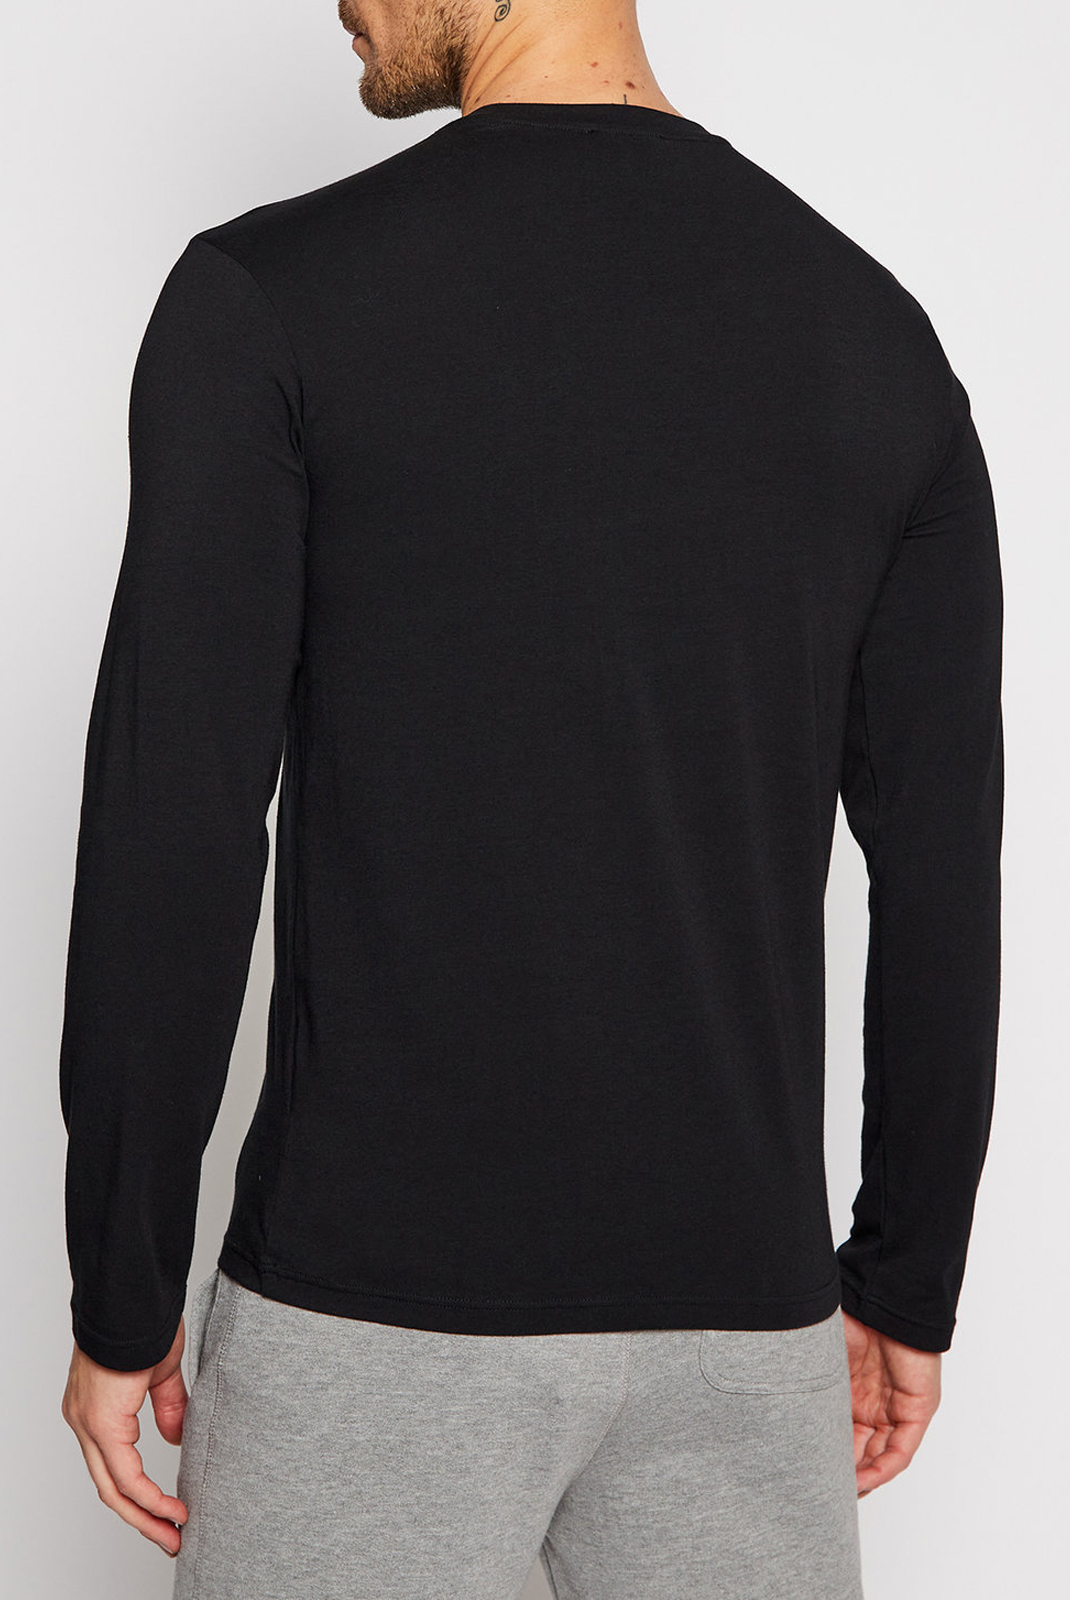 Tee-shirt noir à manches longues Emporio Armani - 111653 